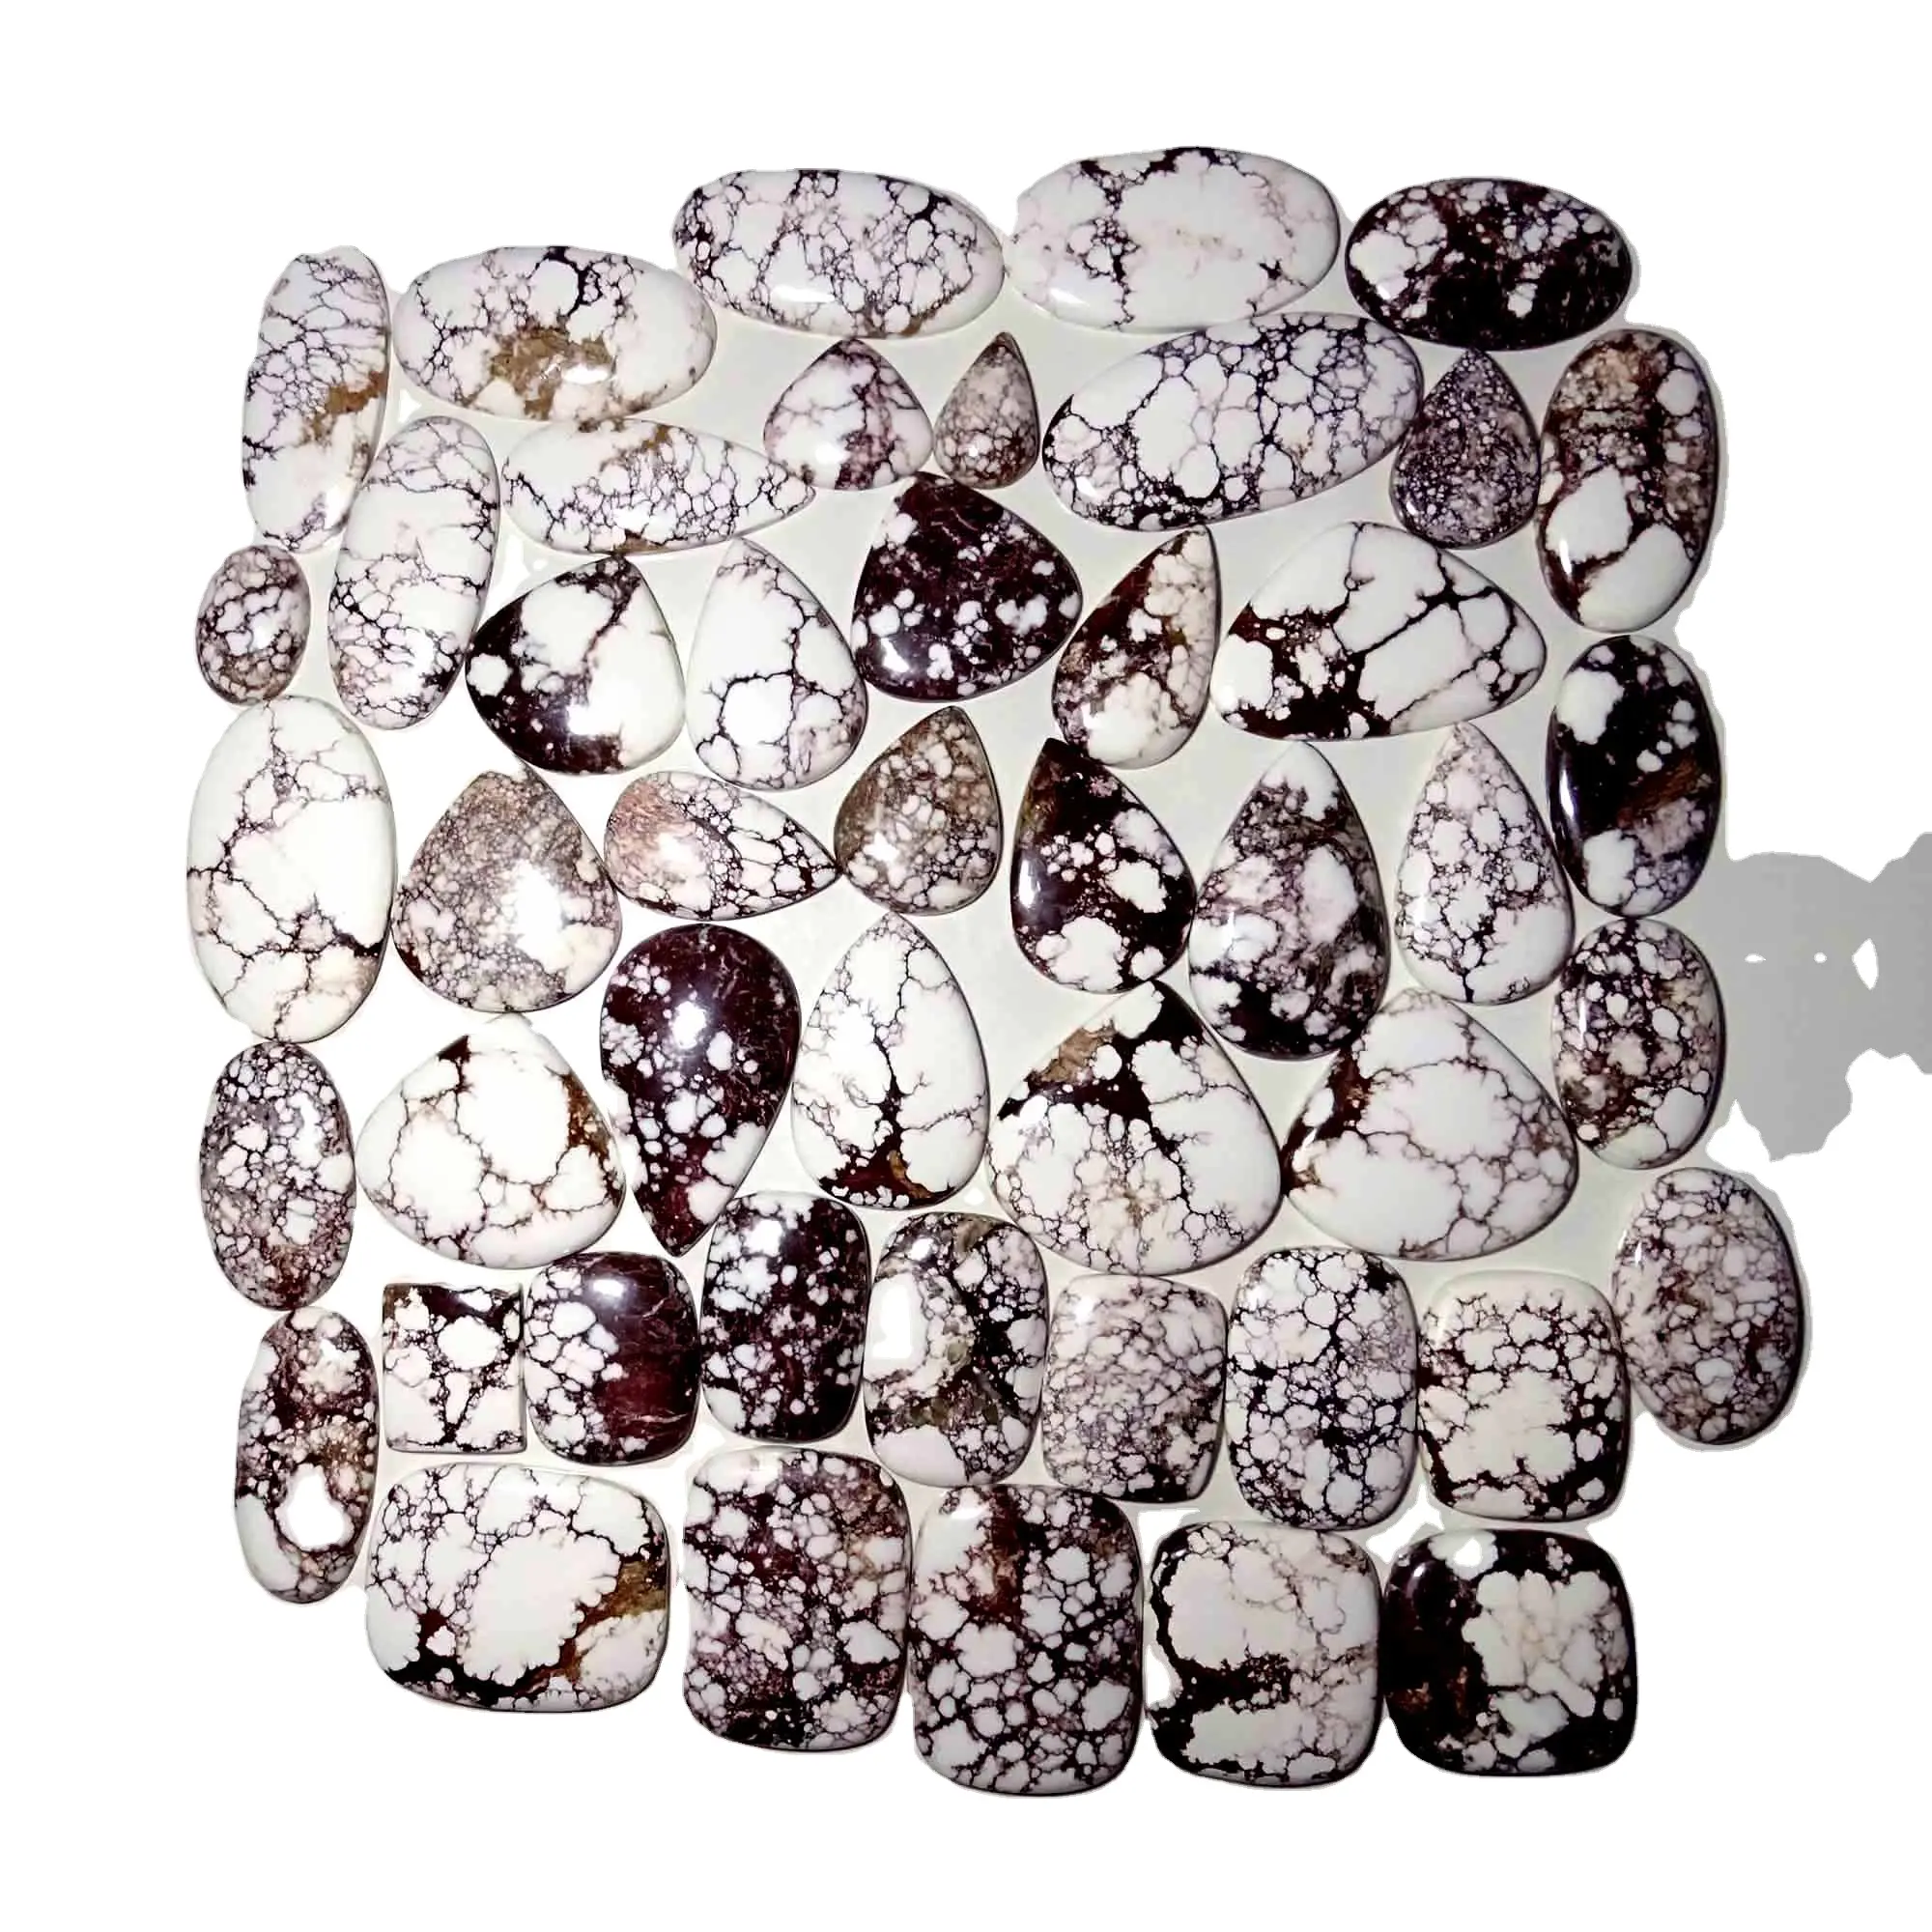 Wholesale Lot Loose Gemstone Natural Cabochon Wild Horse Gemstone High Quality Semi Precious Jewelry Stones Wild Horse Magnesite